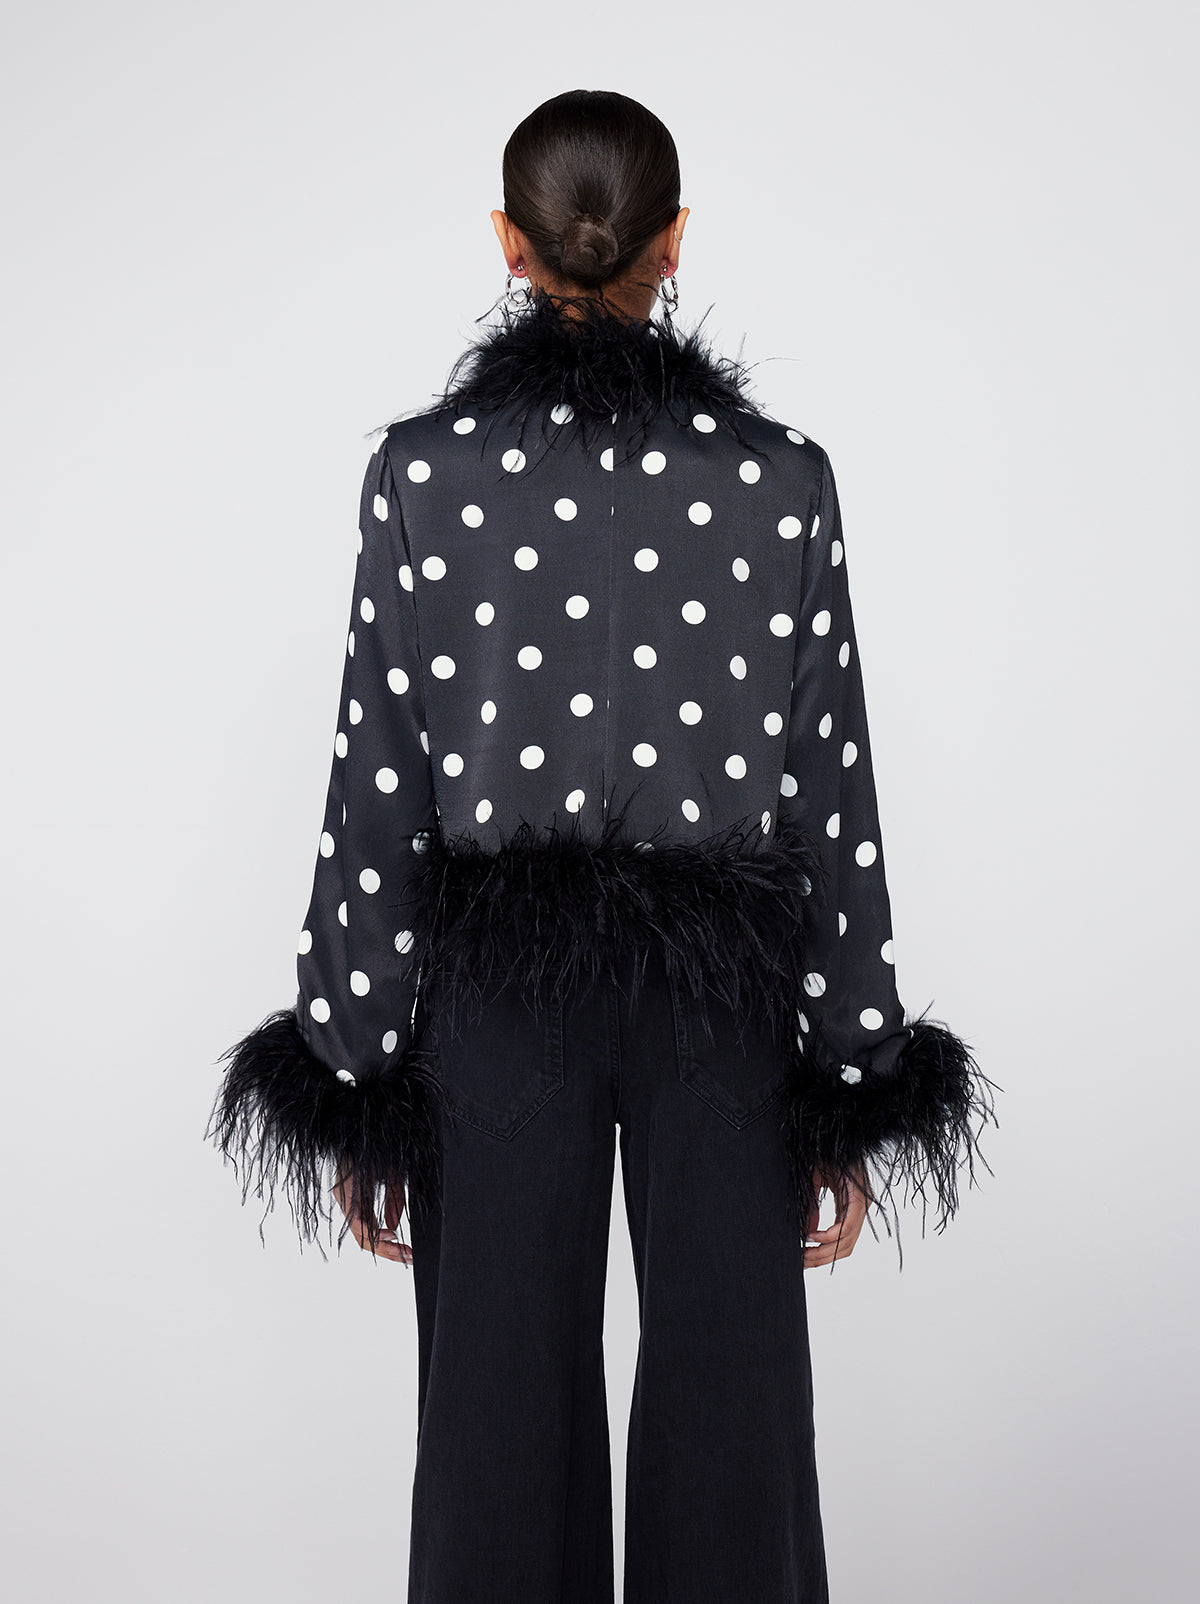 Mariah Black Polka Dot Feather Jacket By KITRI Studio